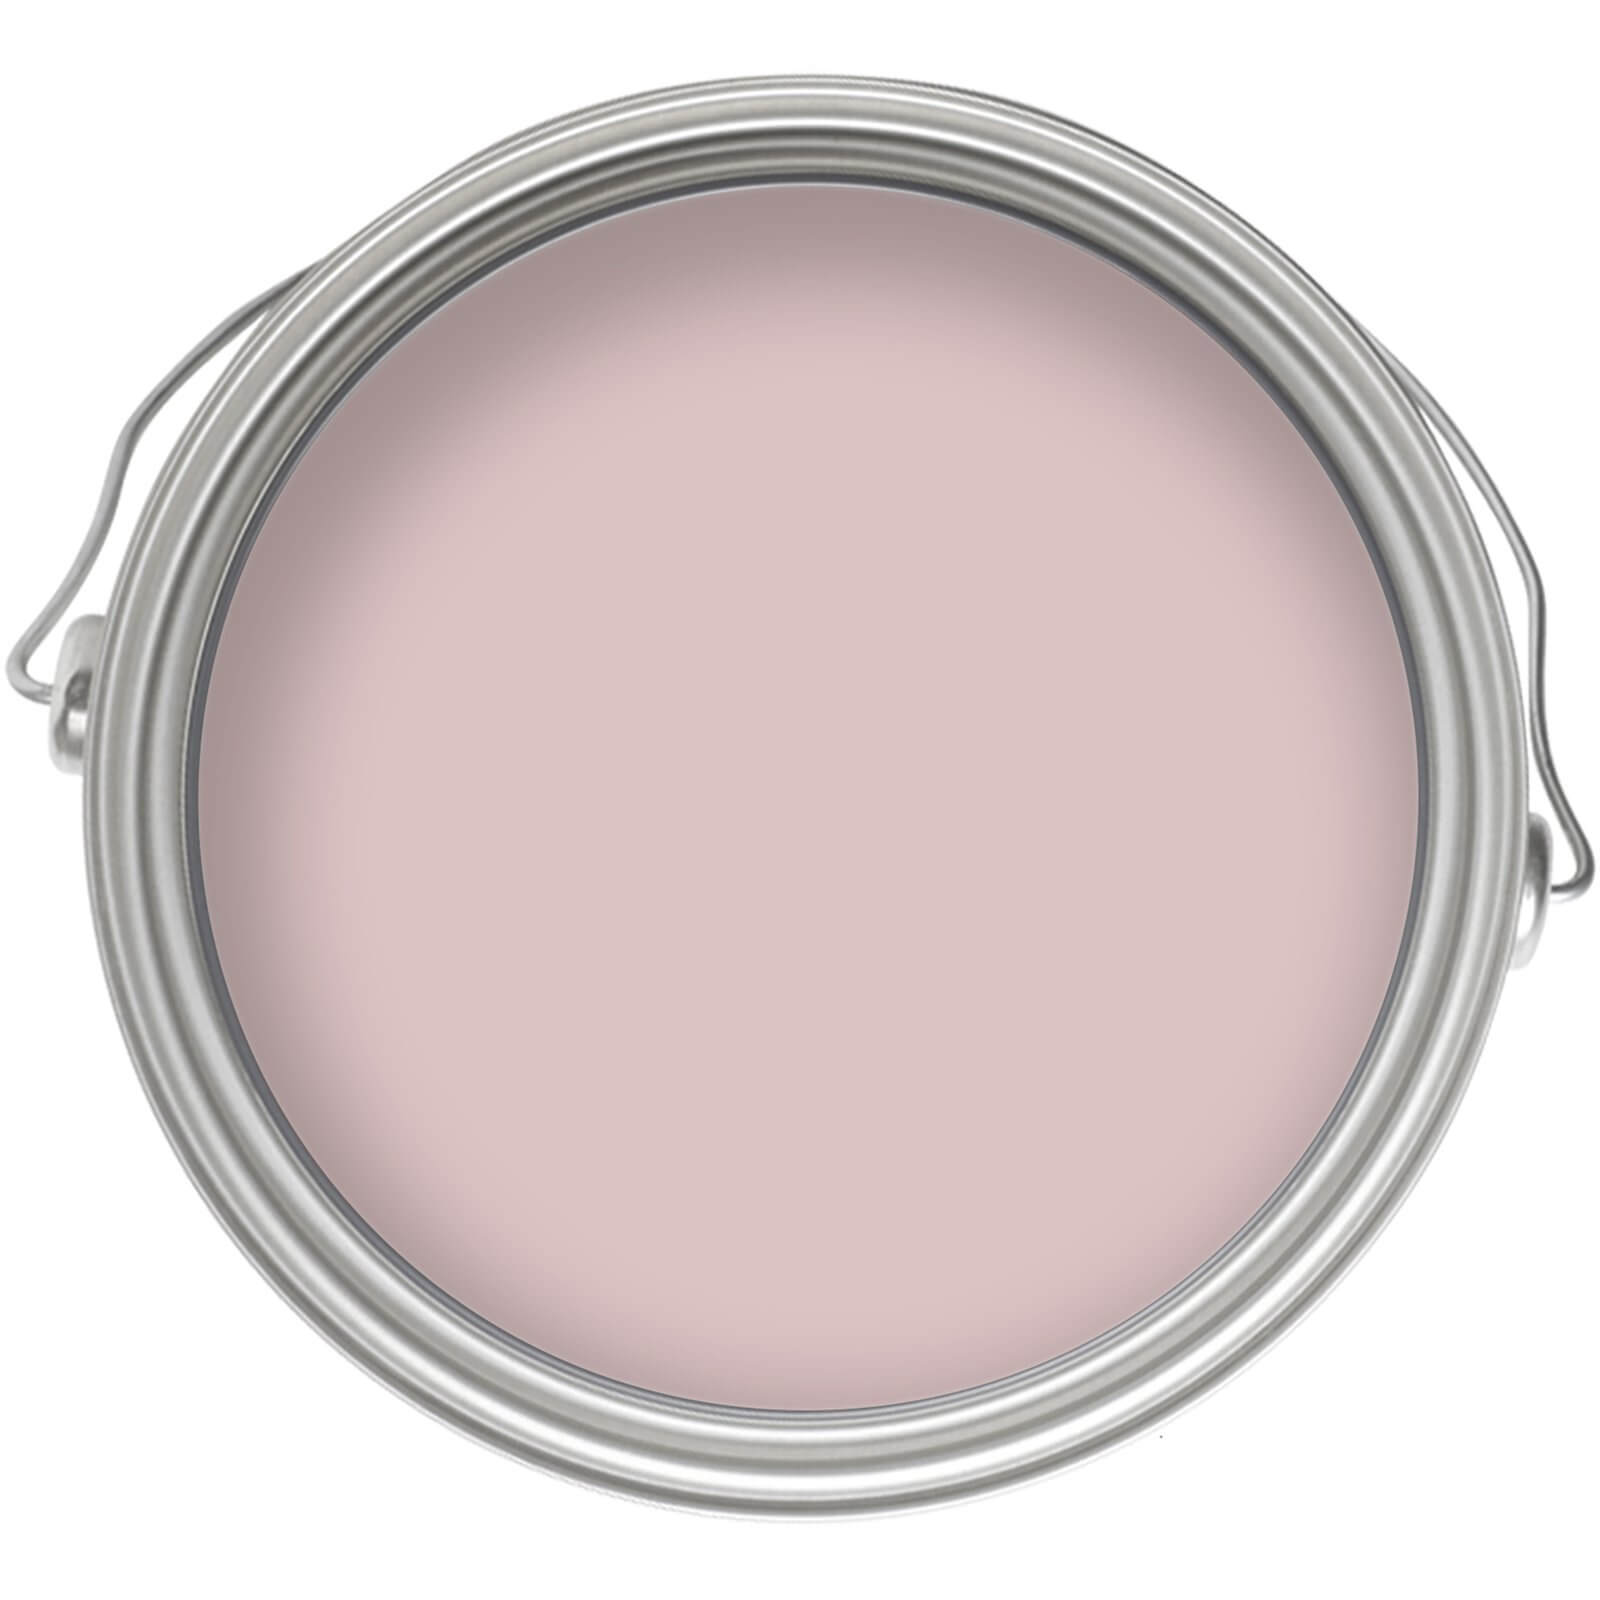 Homebase Silk Emulsion Paint Hush Pink - 2.5L